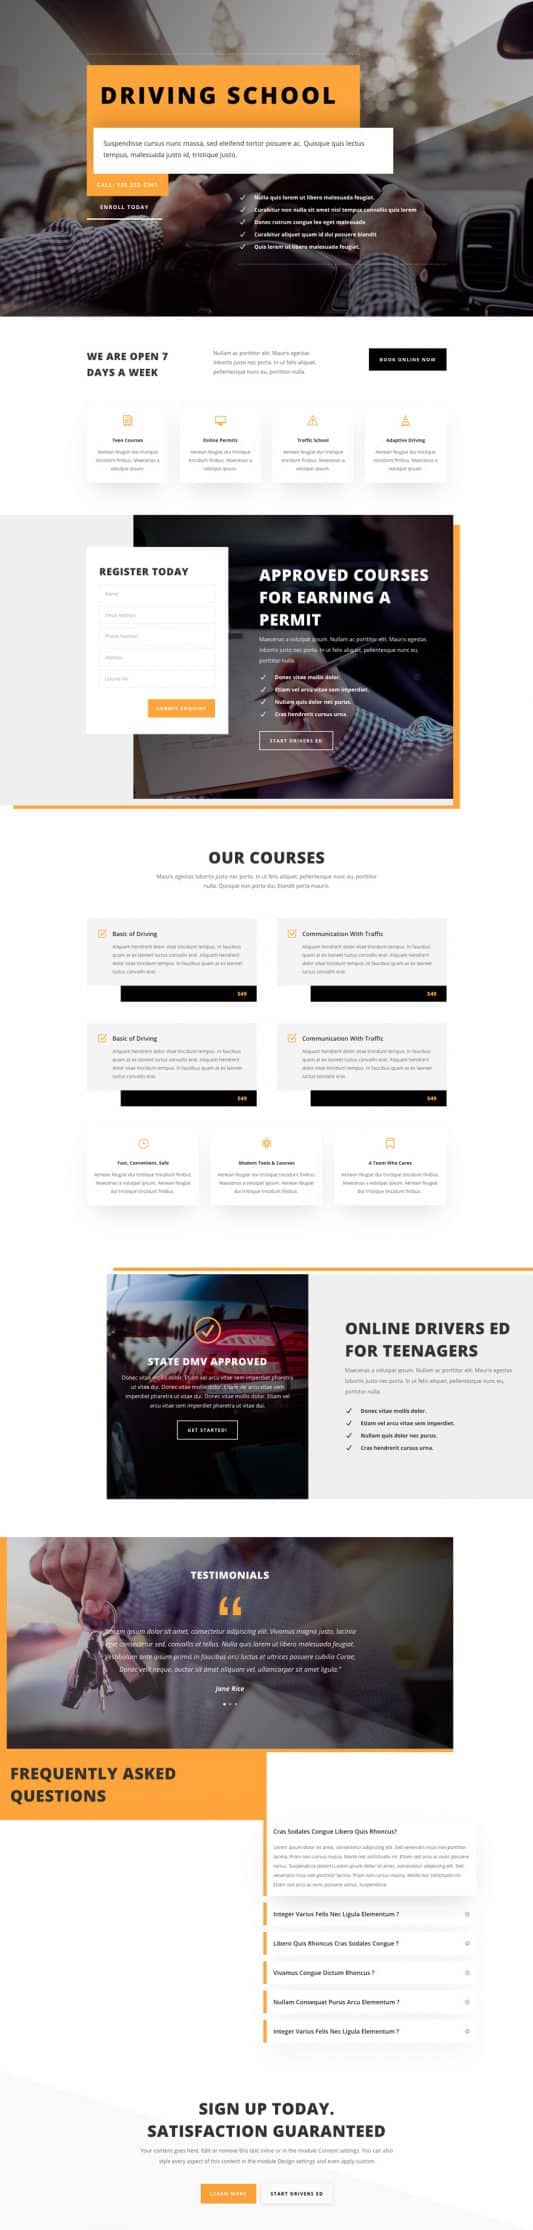 Driving School Web Design 6